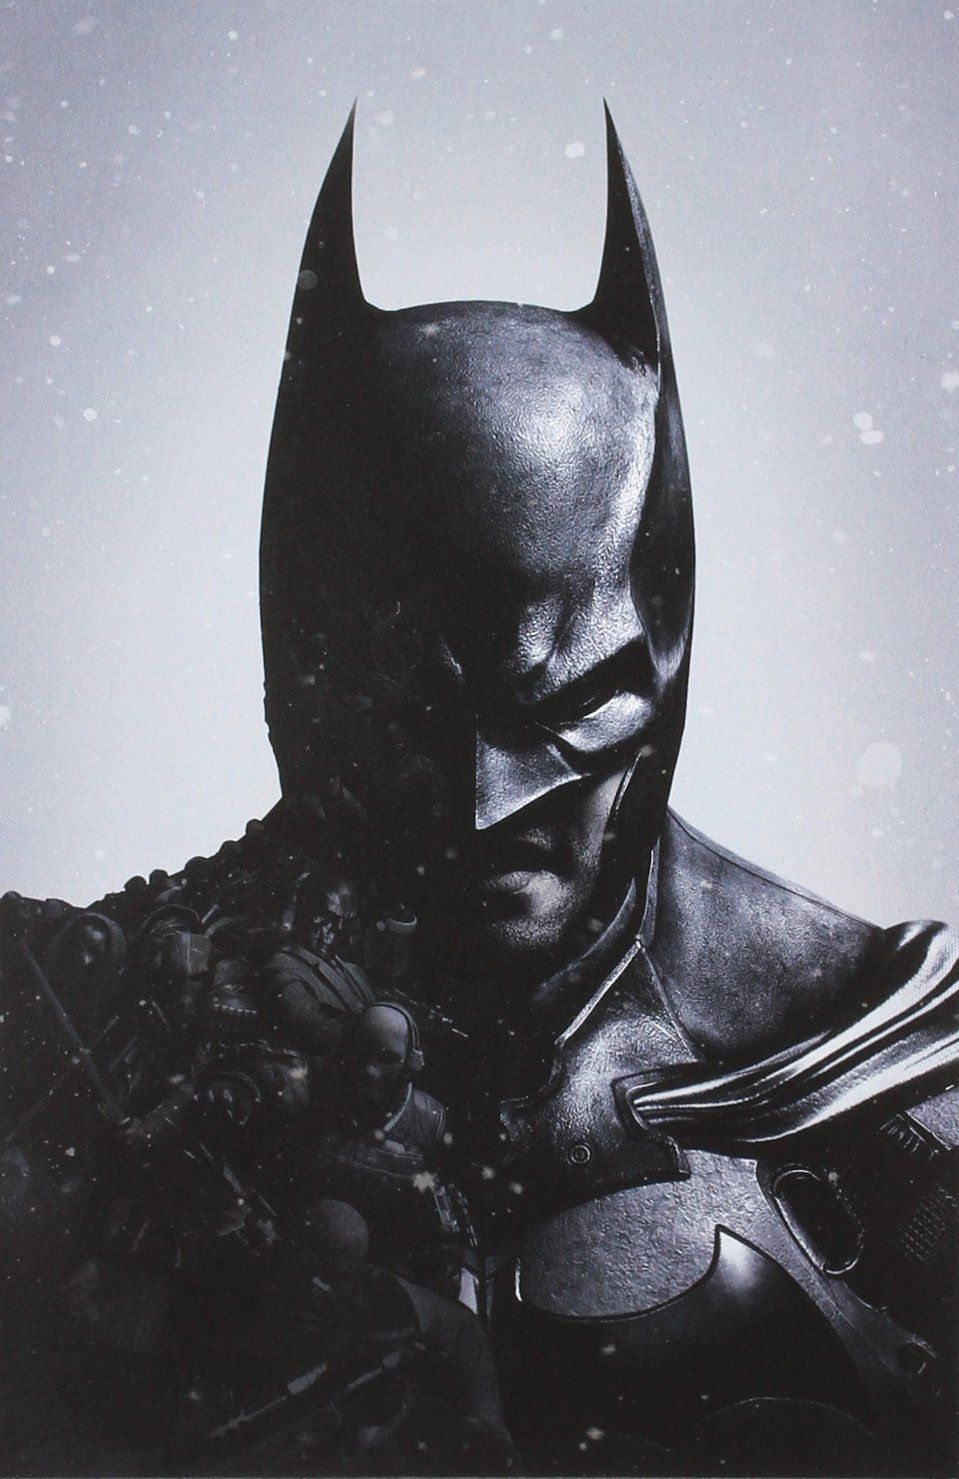 Limited Edition Batman Wallpaper HD